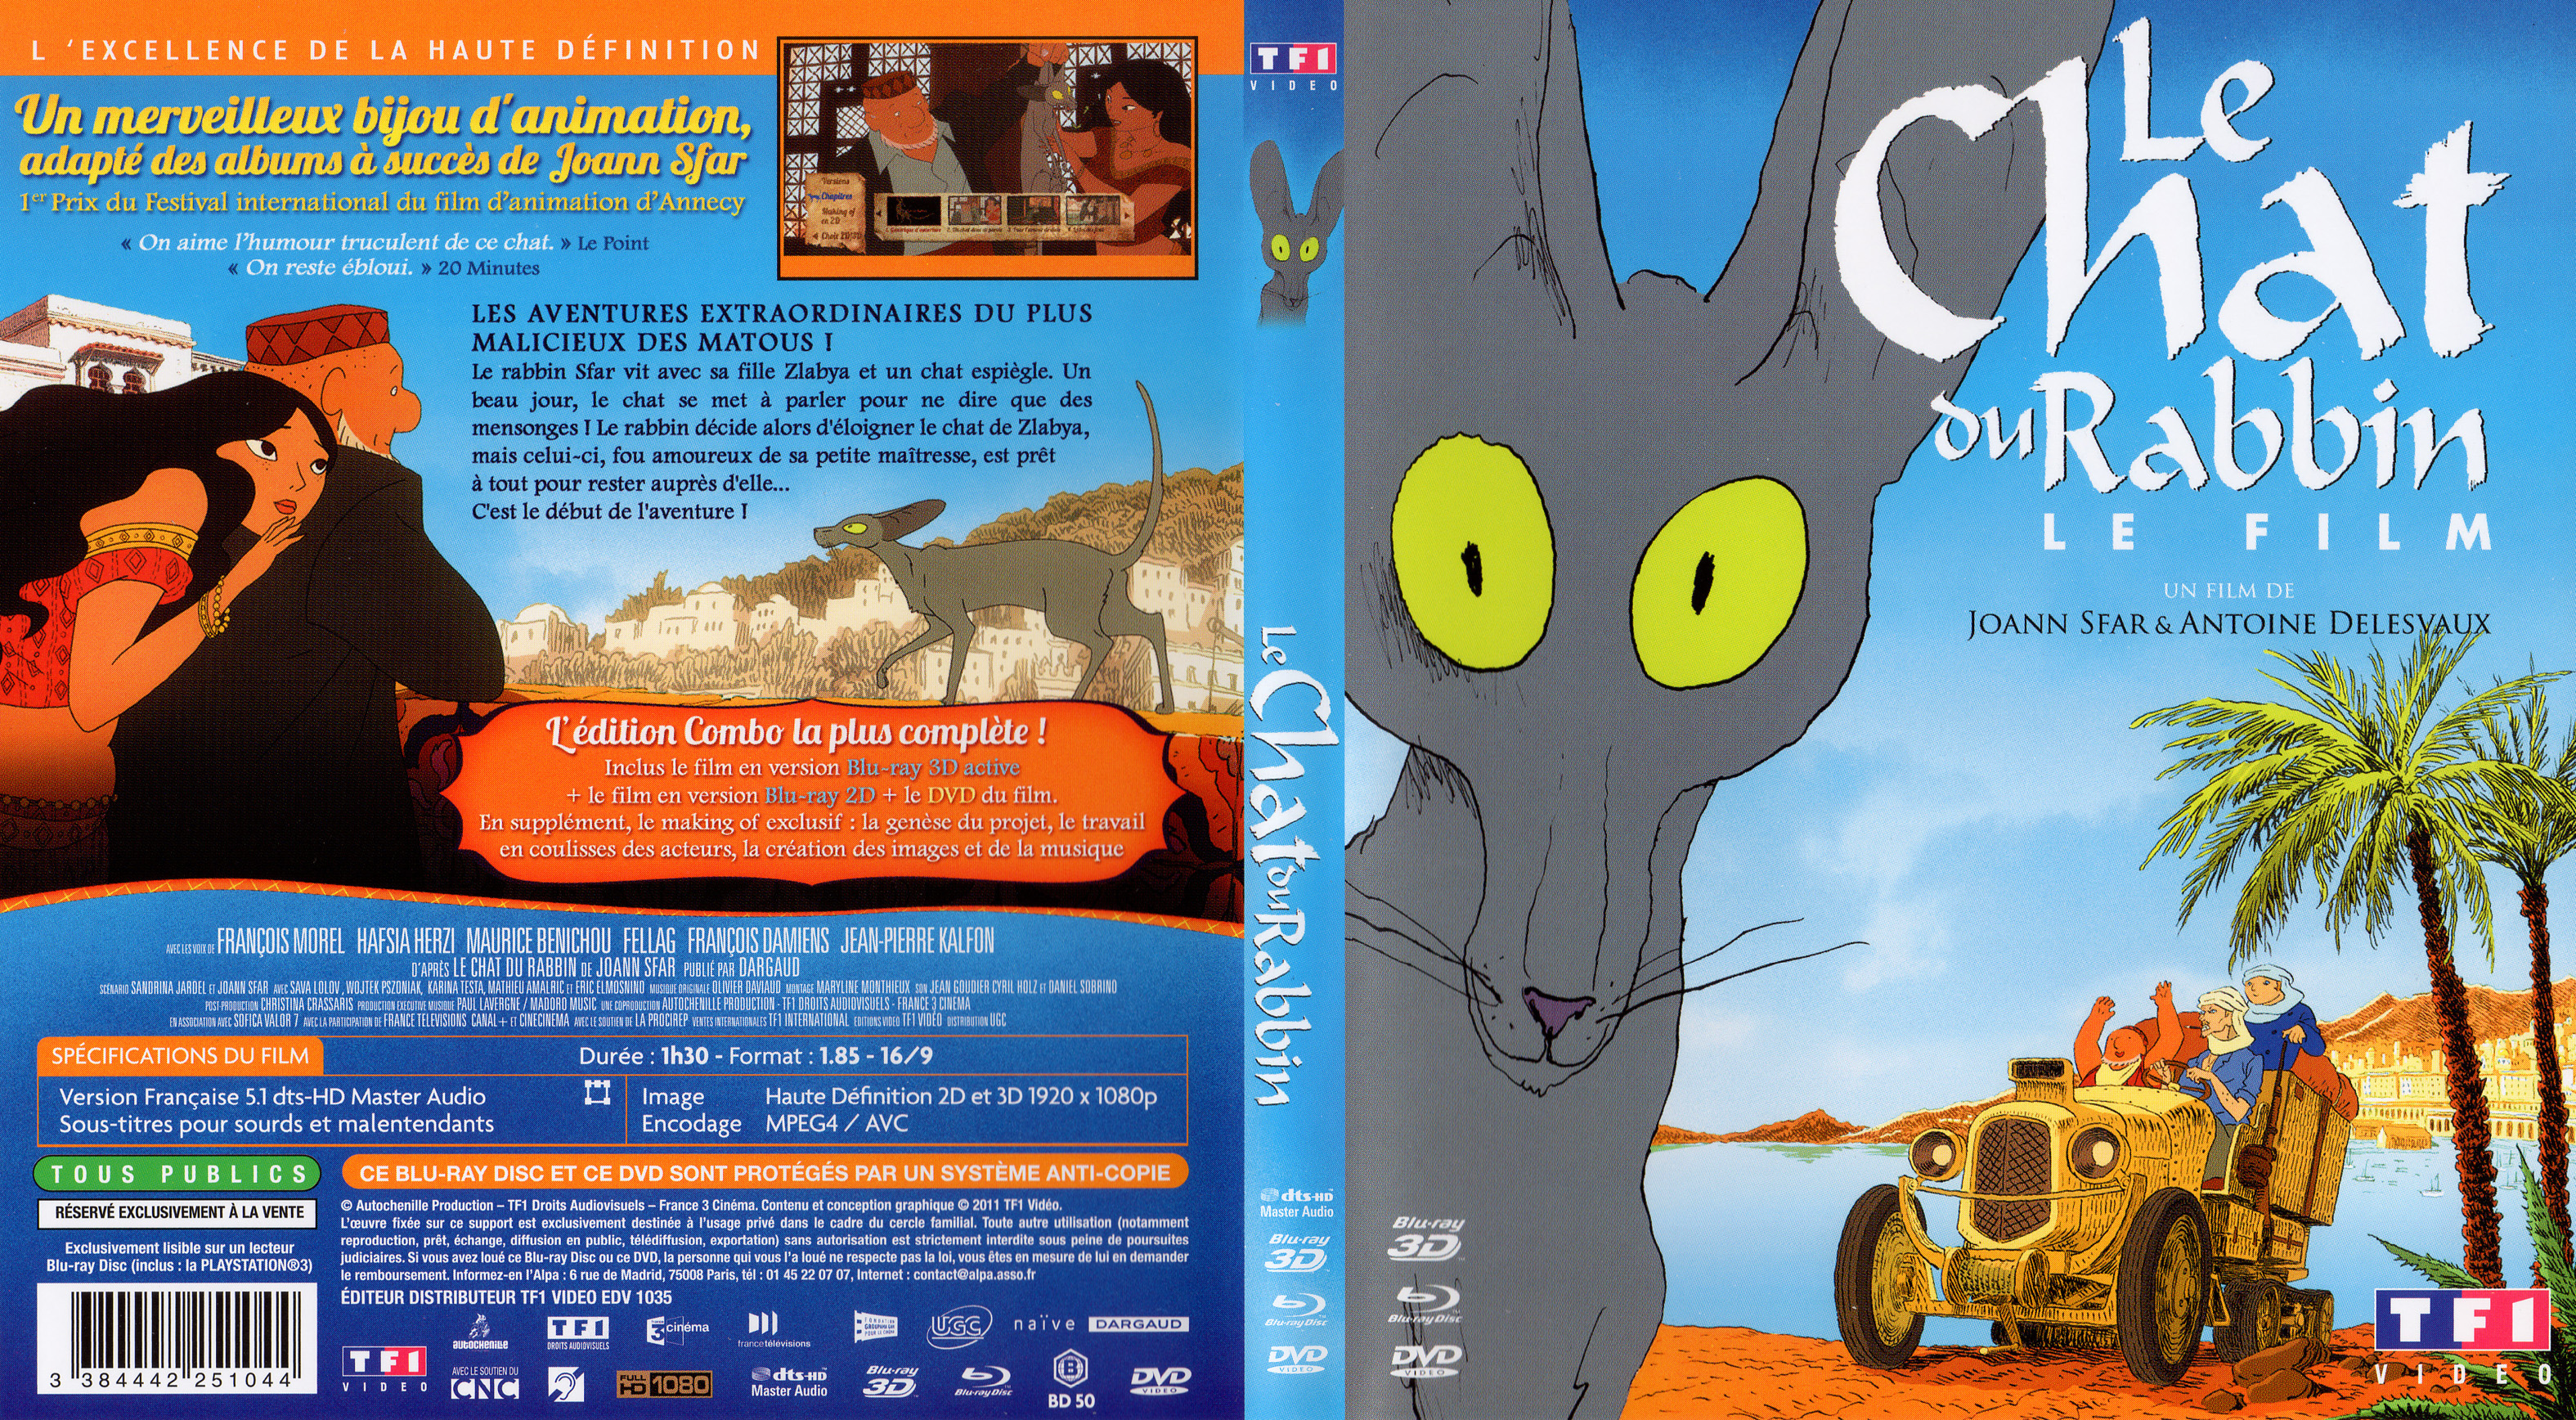 Jaquette DVD Le chat du rabbin (BLU-RAY)